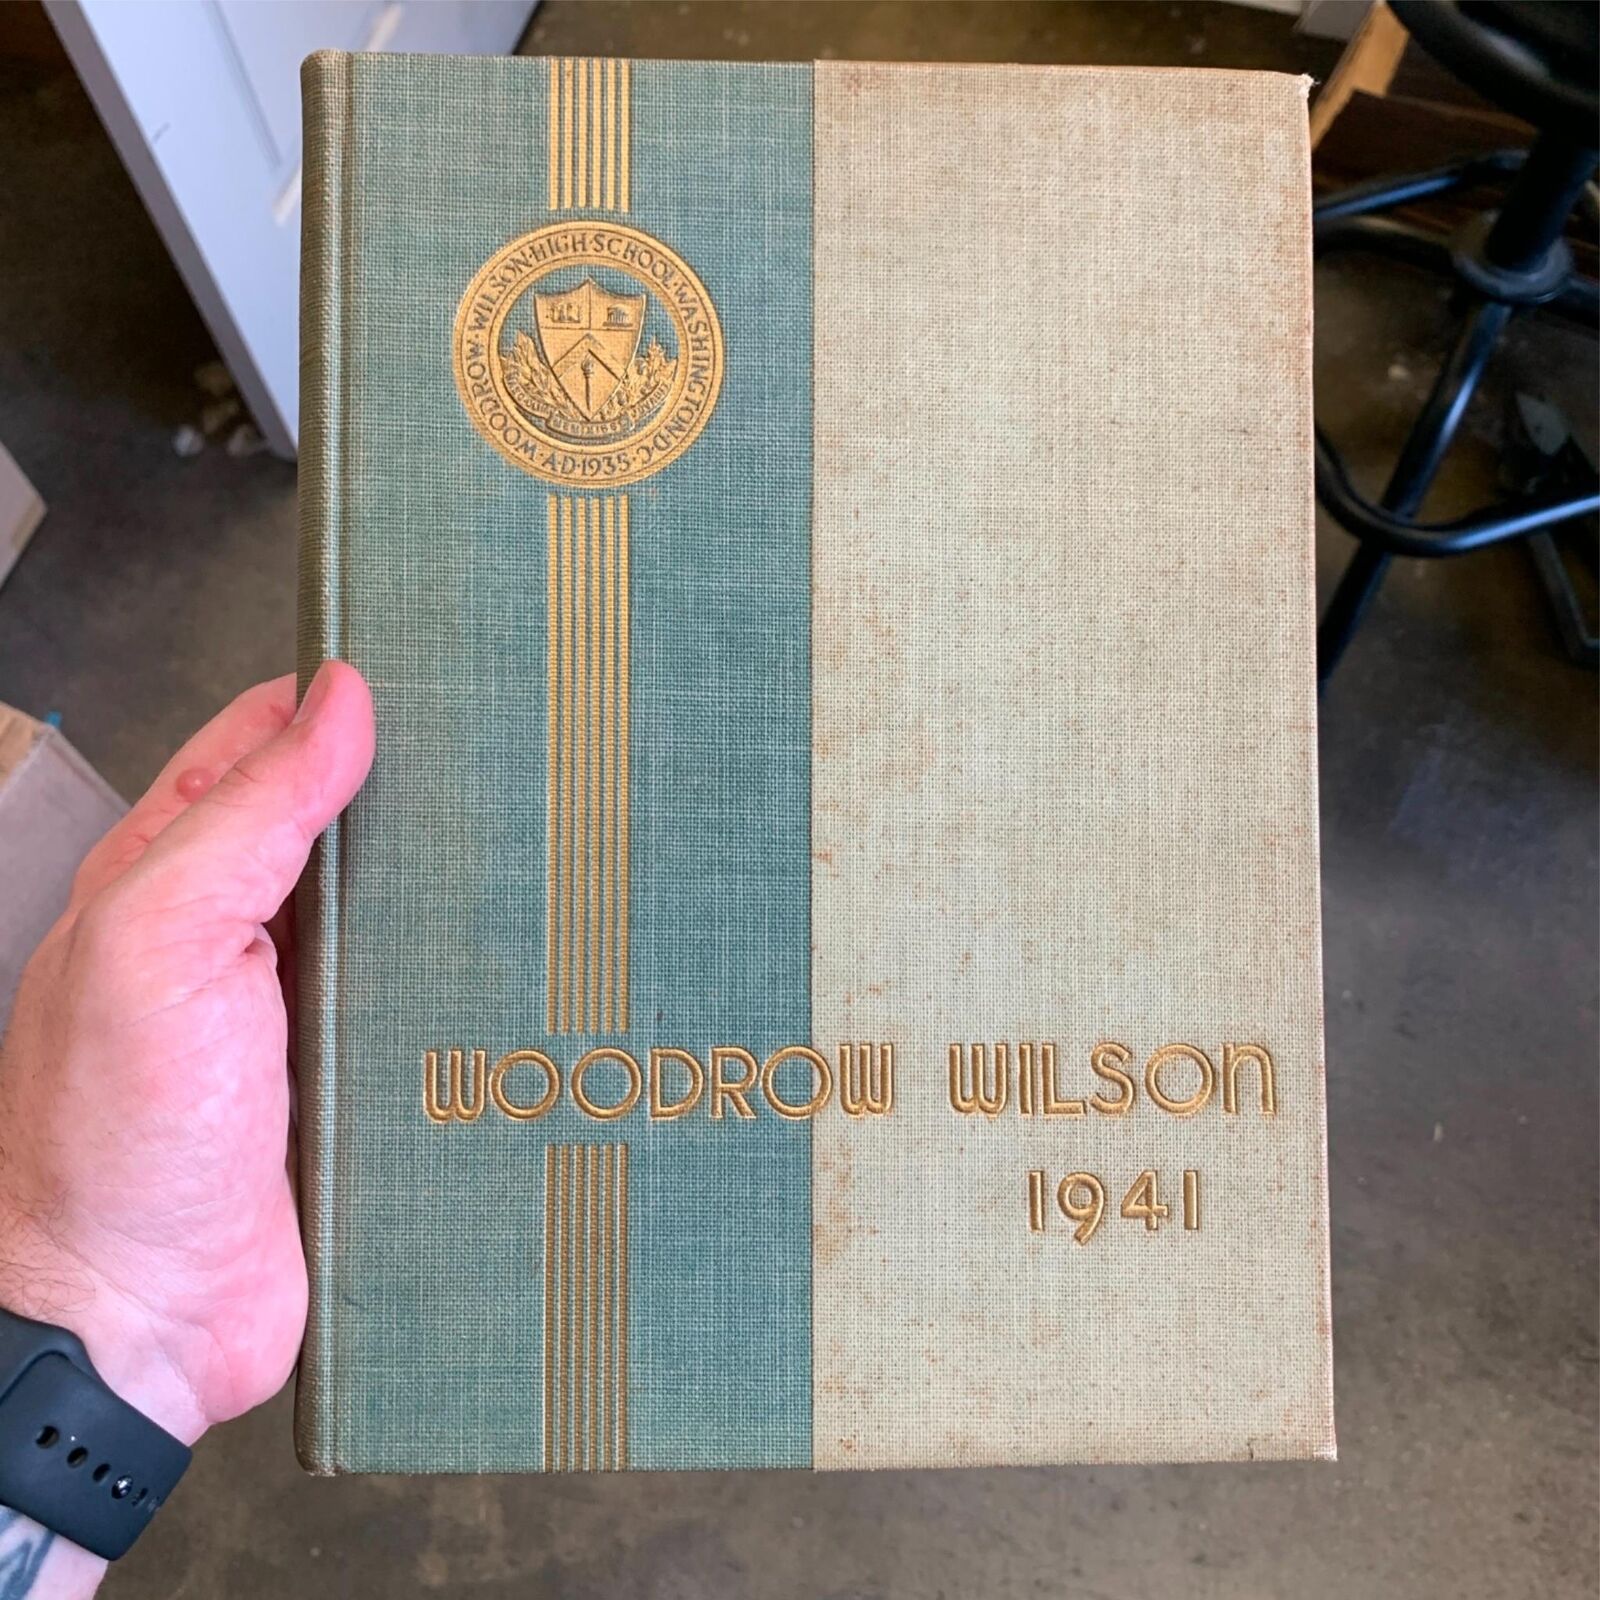 Woodrow Wilson High School Yearbook 1941 Washington, DC